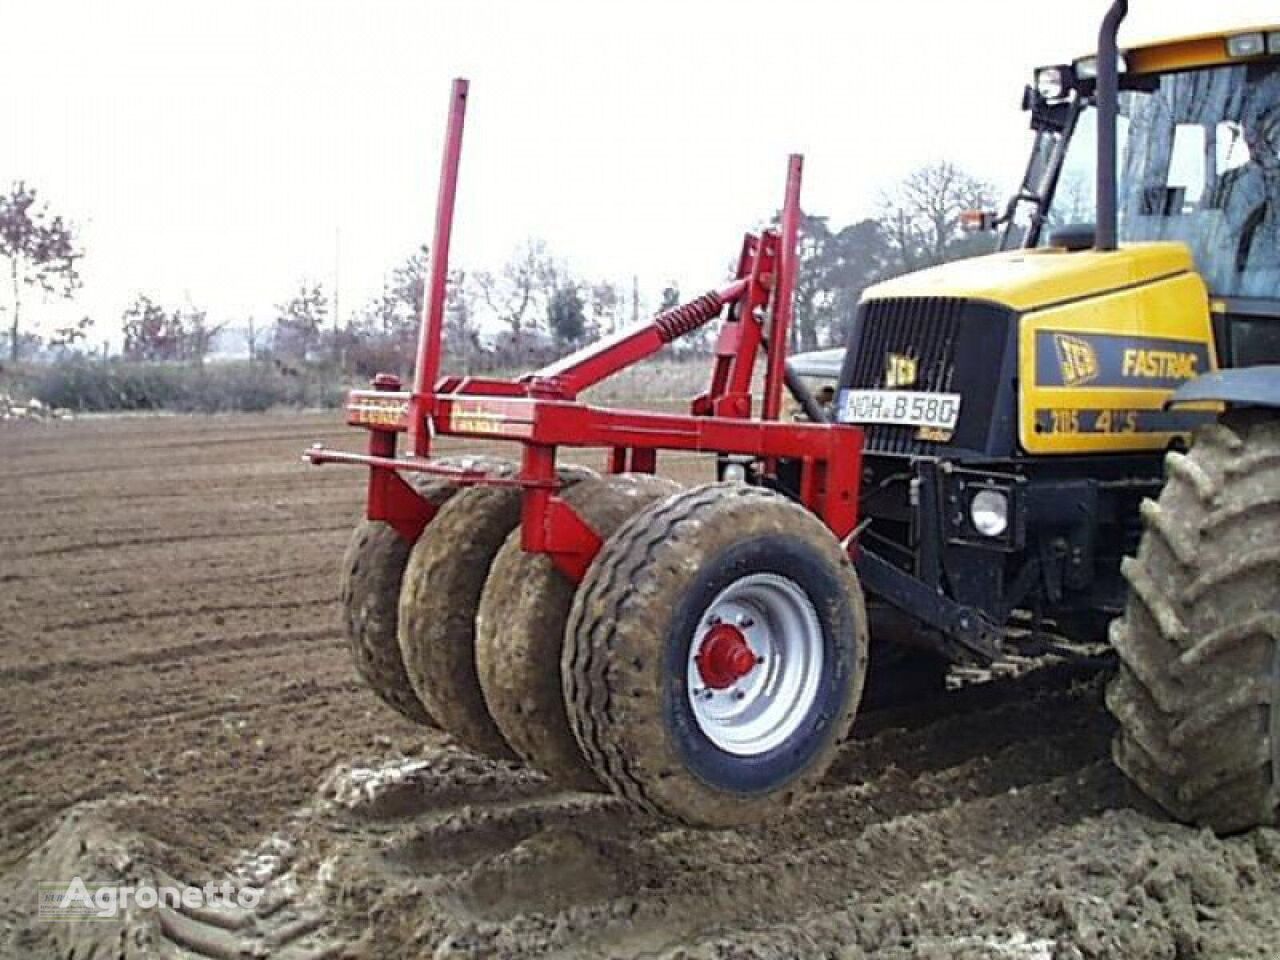 EURO-Jabelmann  V 1500 FRP rodillo agrícola nuevo